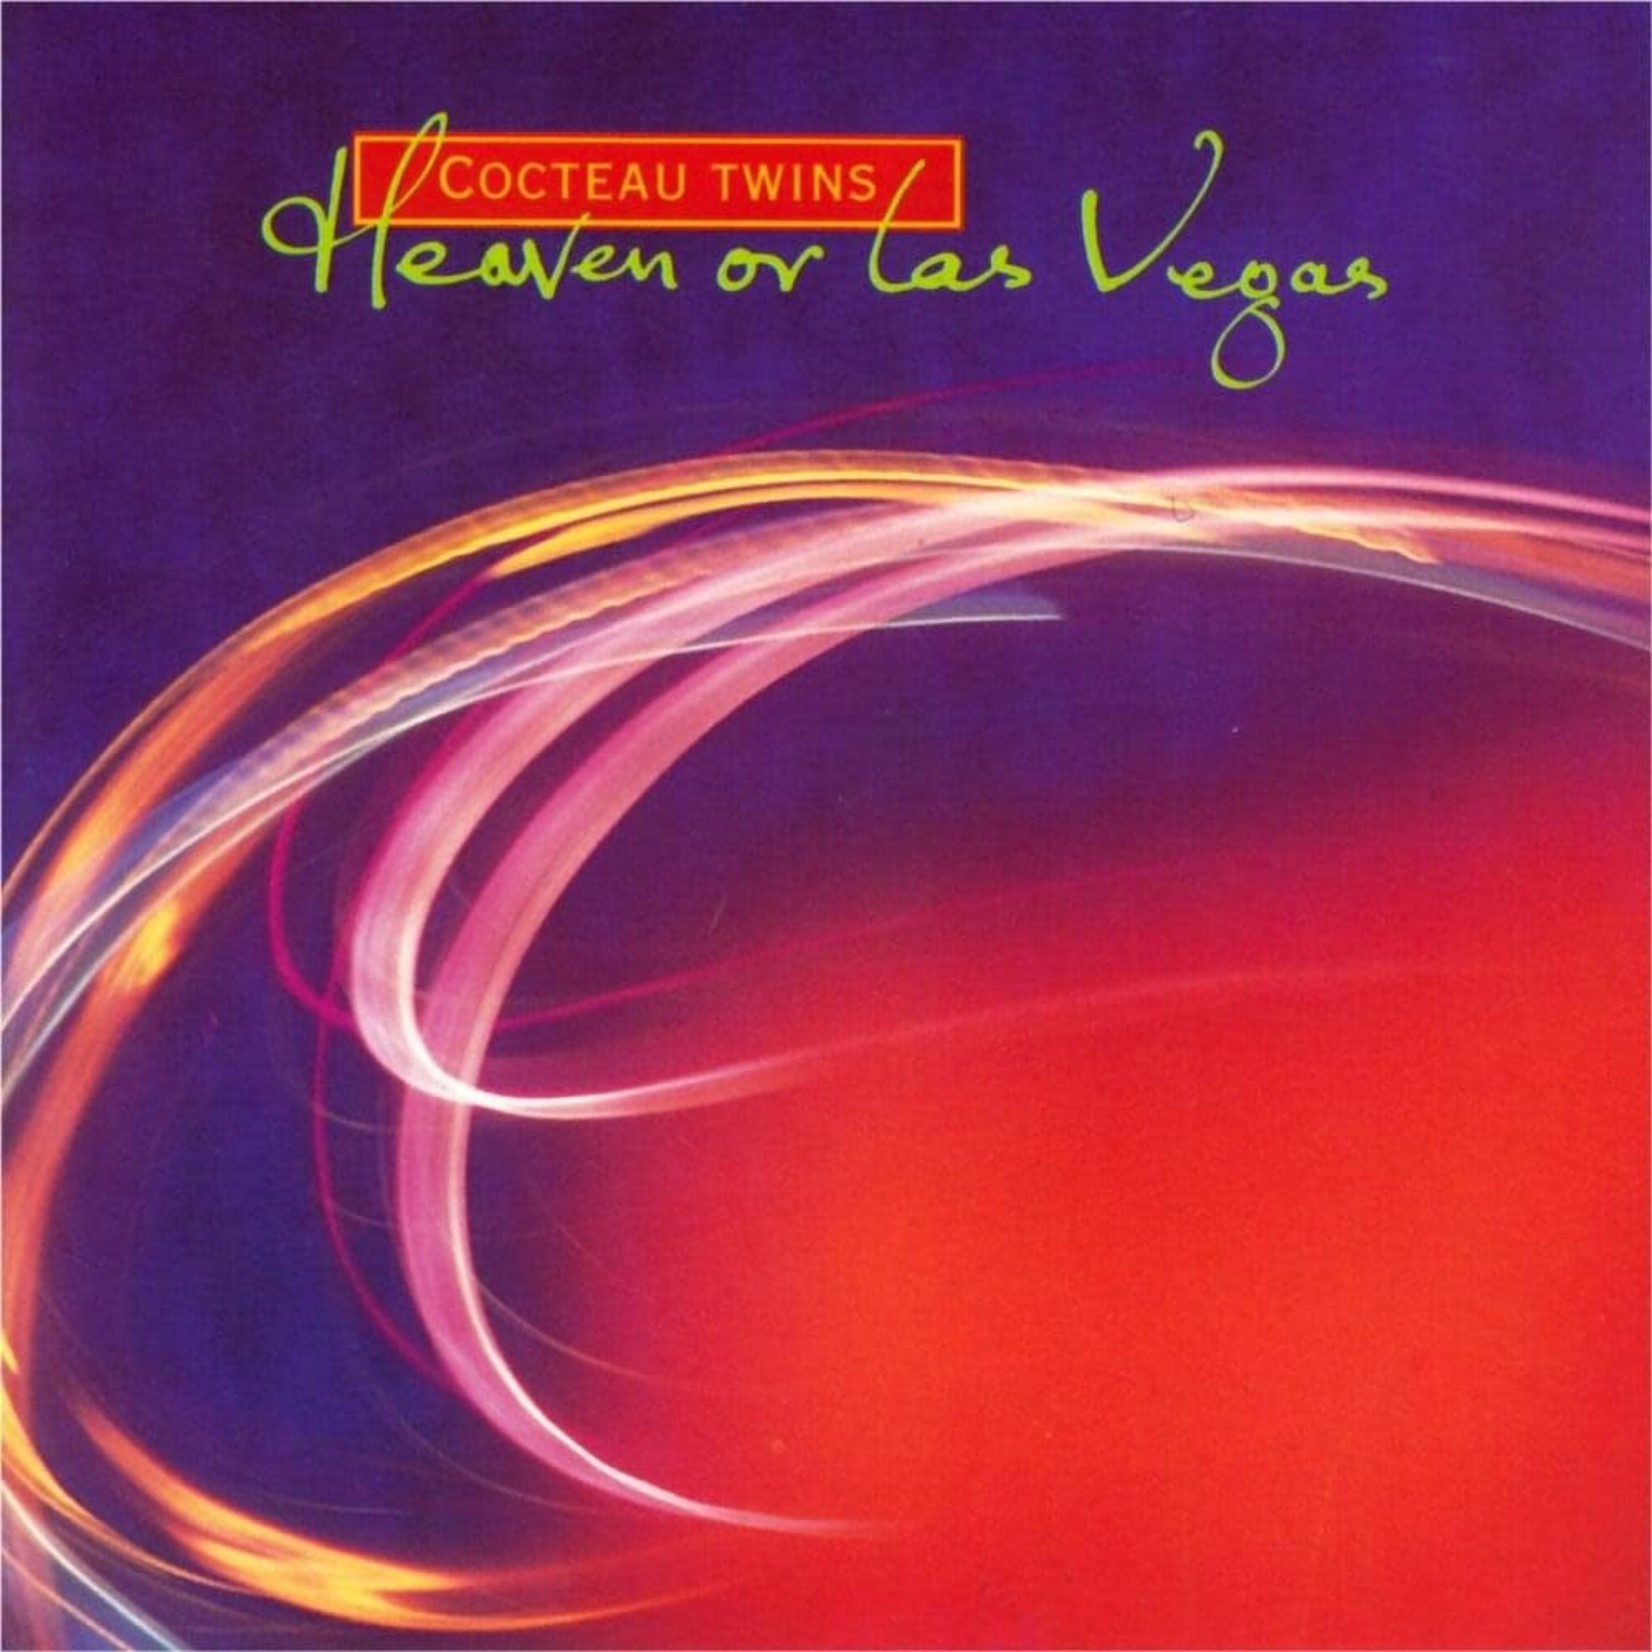 [New] Cocteau Twins - Heaven Or Las Vegas